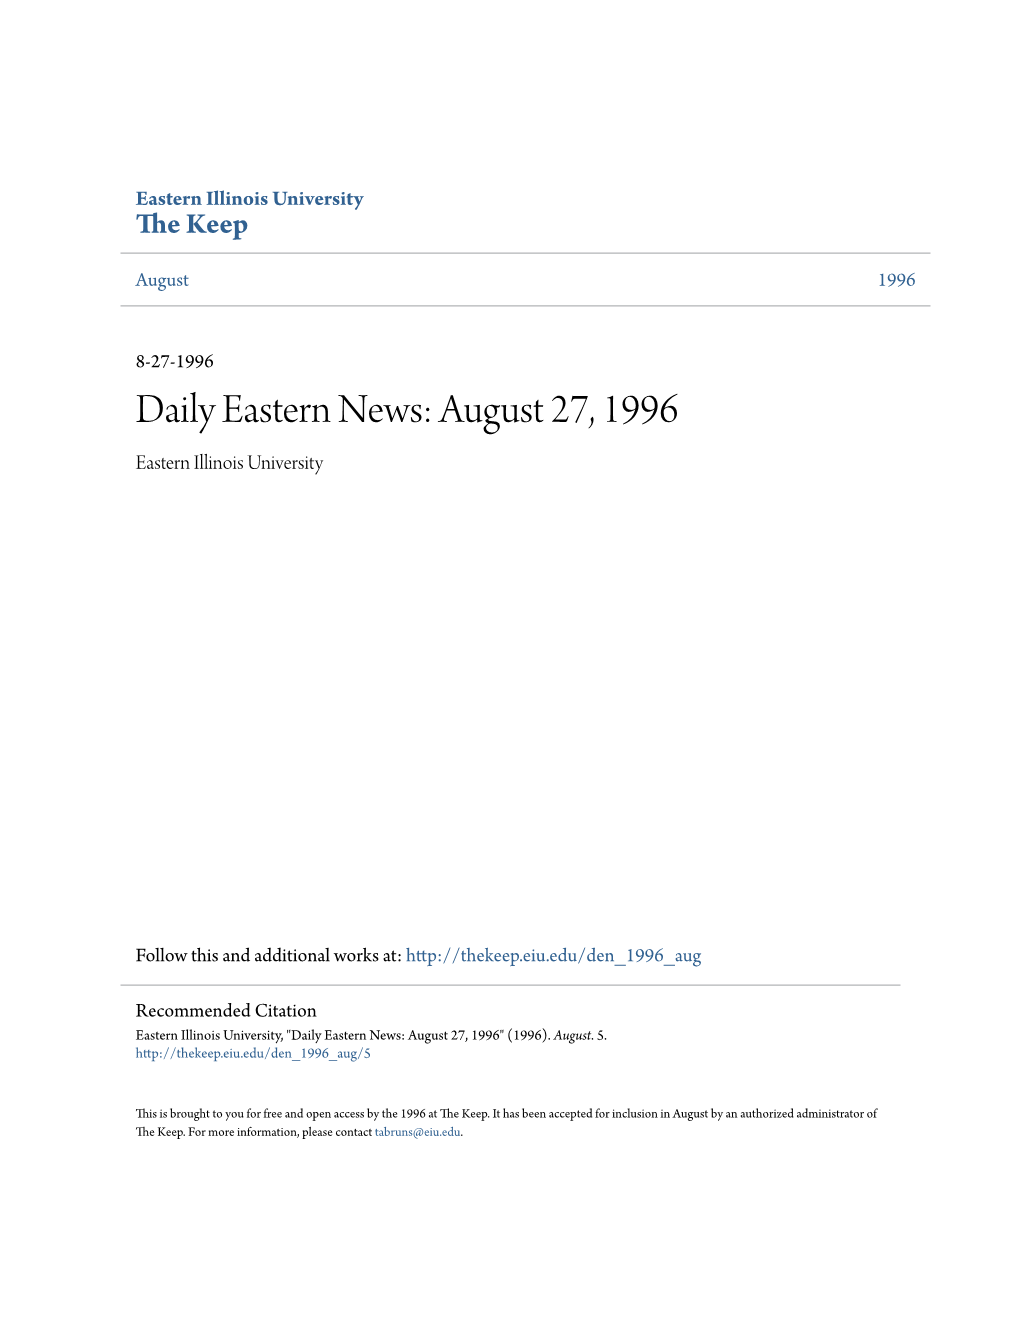 Daily Eastern News: August 27, 1996 Eastern Illinois University